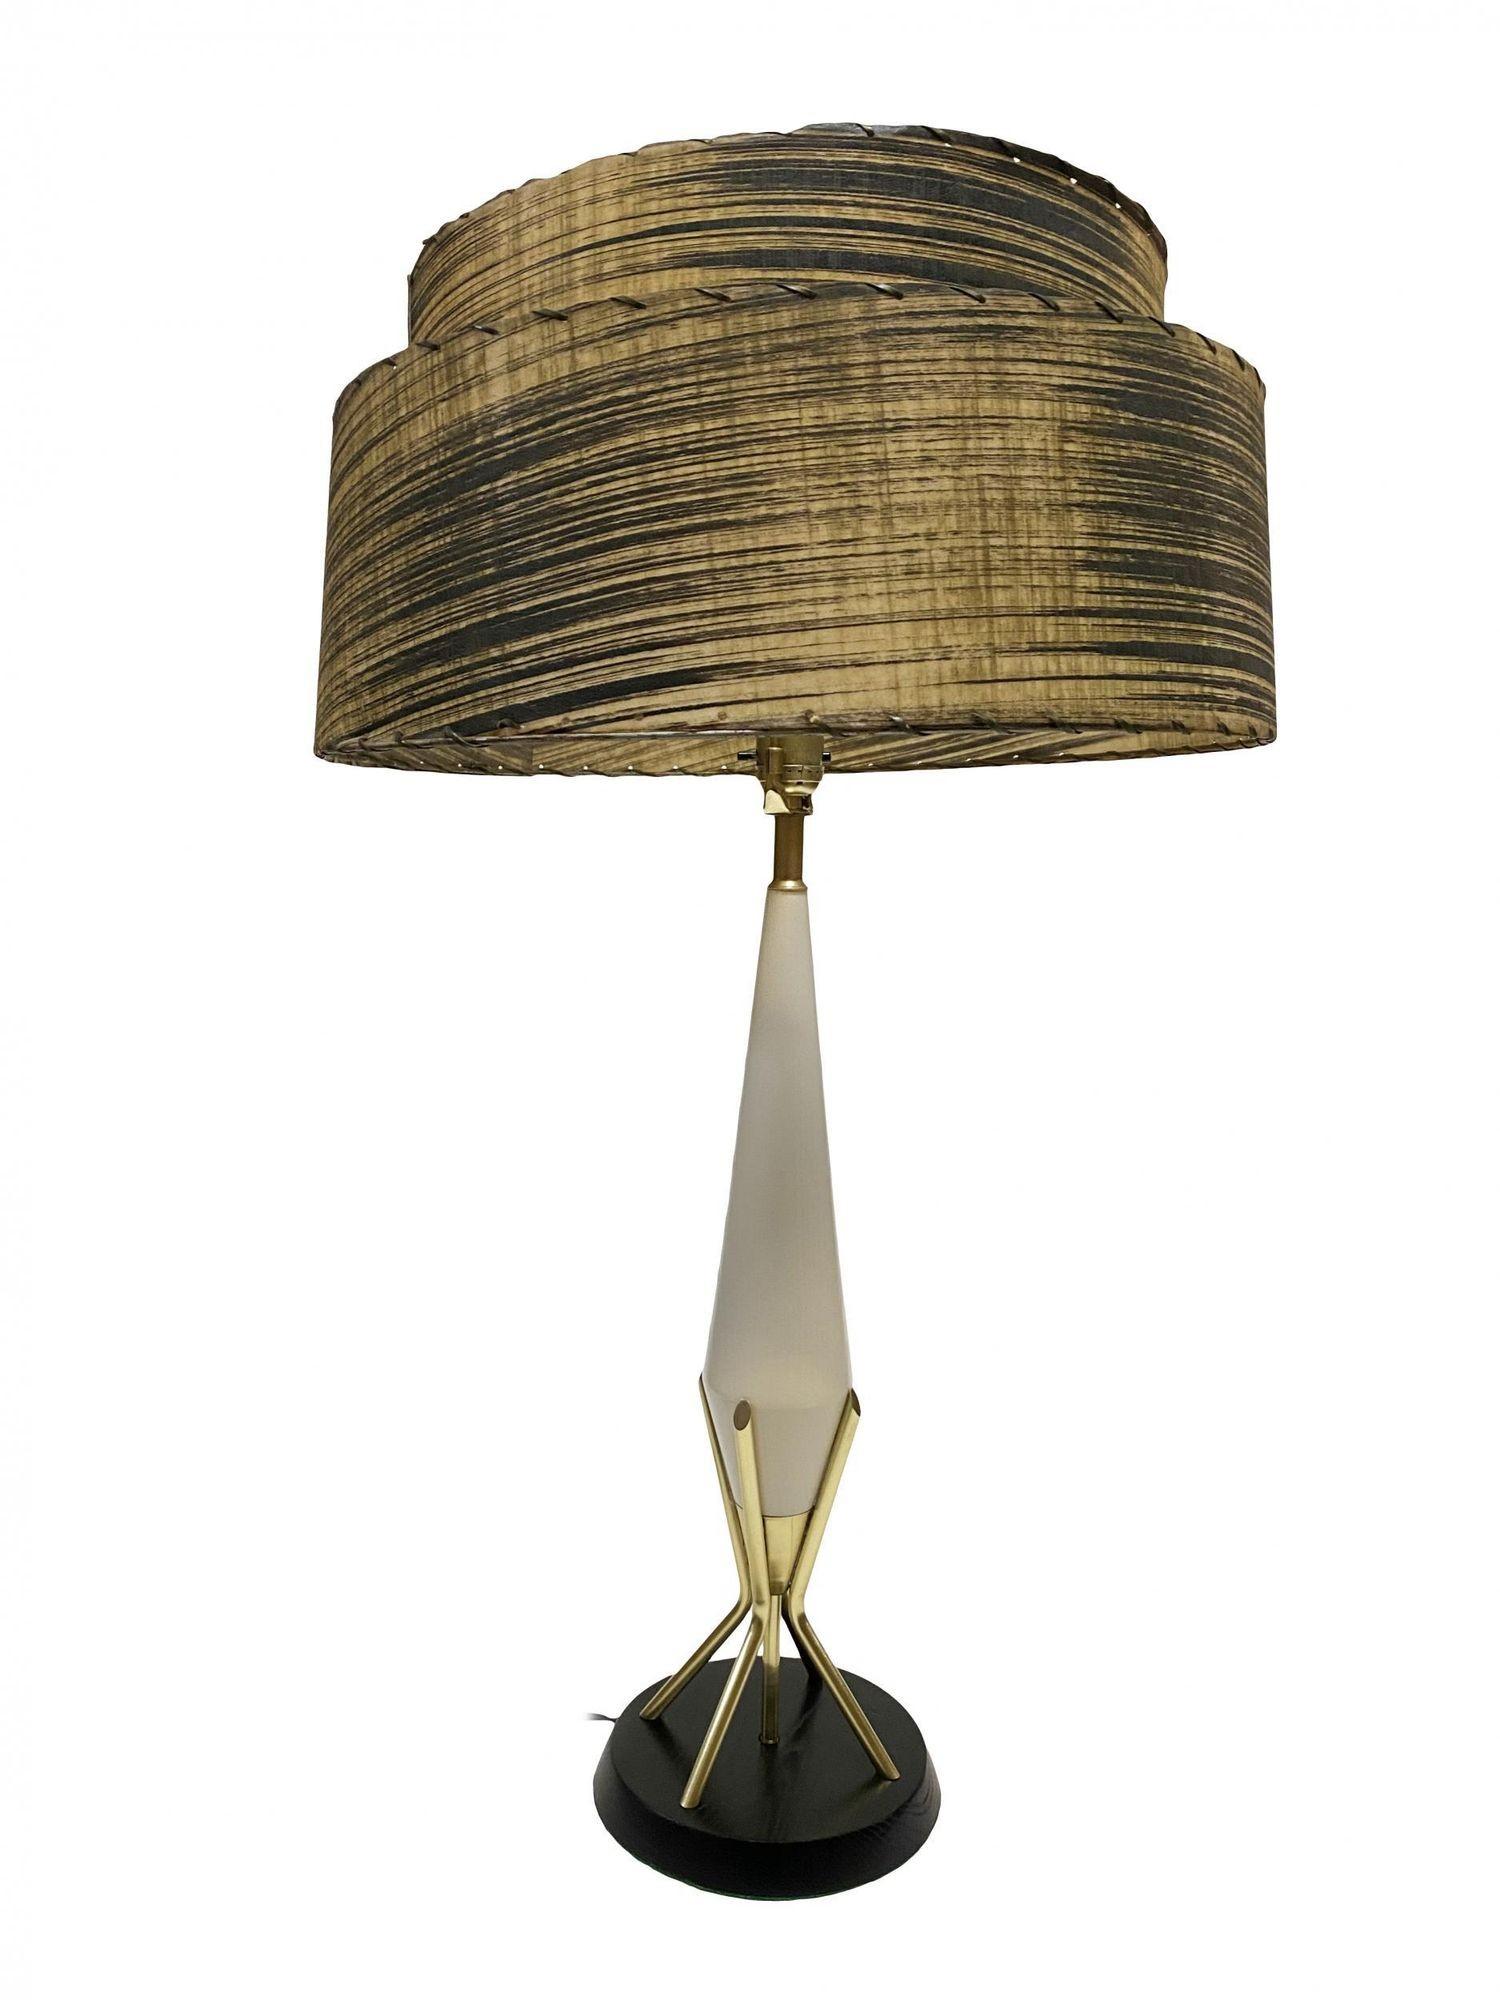 American Mid Century Googie Table Lamp W/ Spun Fiberglass Shade For Sale